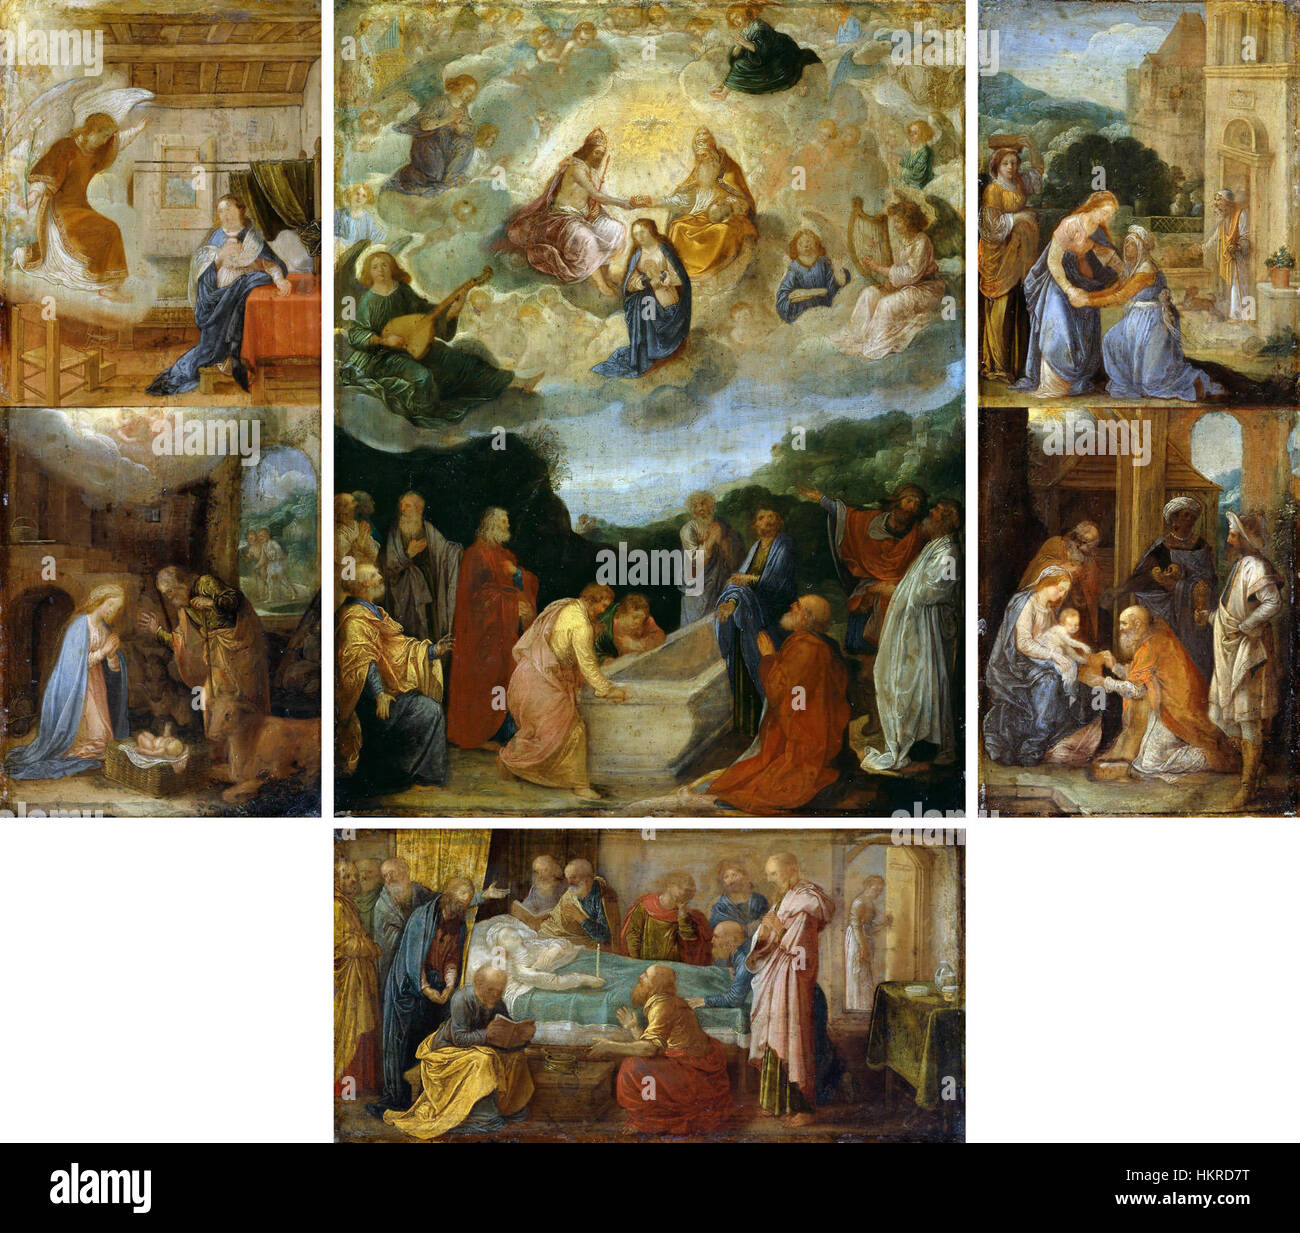 Richard Dadd - Hausaltar mit sechs Szenen aus dem Leben der Jungfrau Maria Banque D'Images